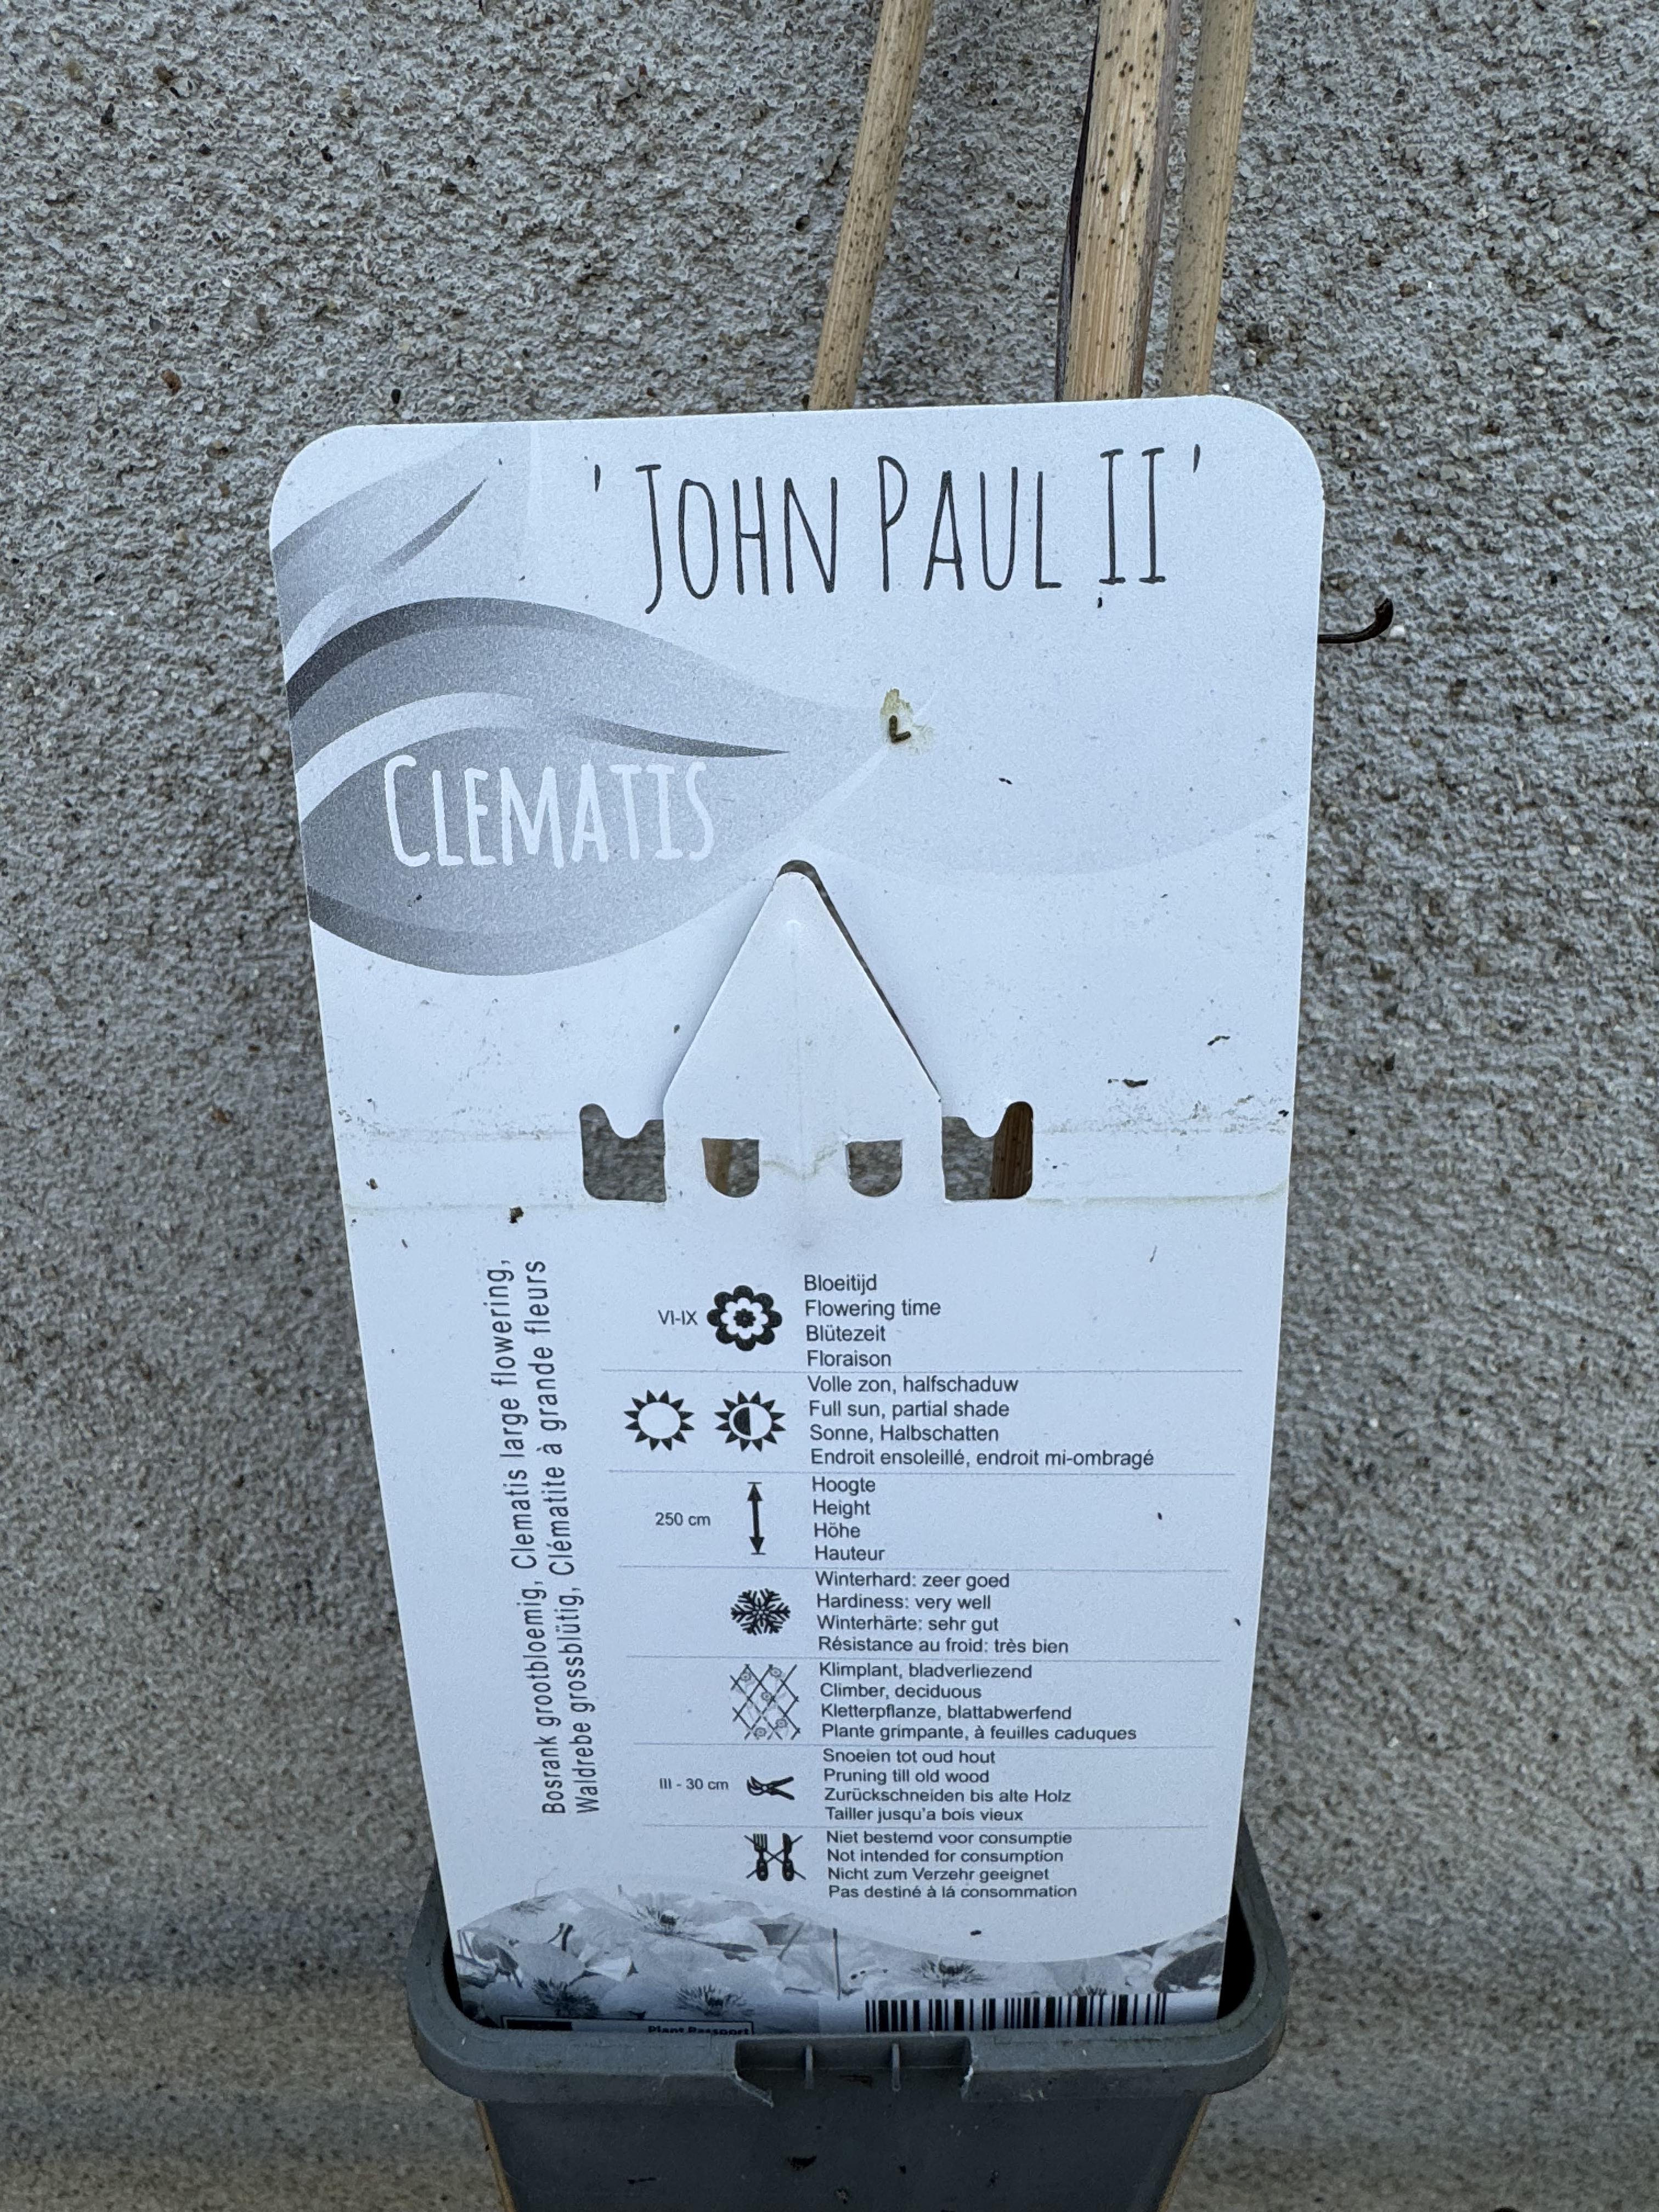 Clematis John Paul II